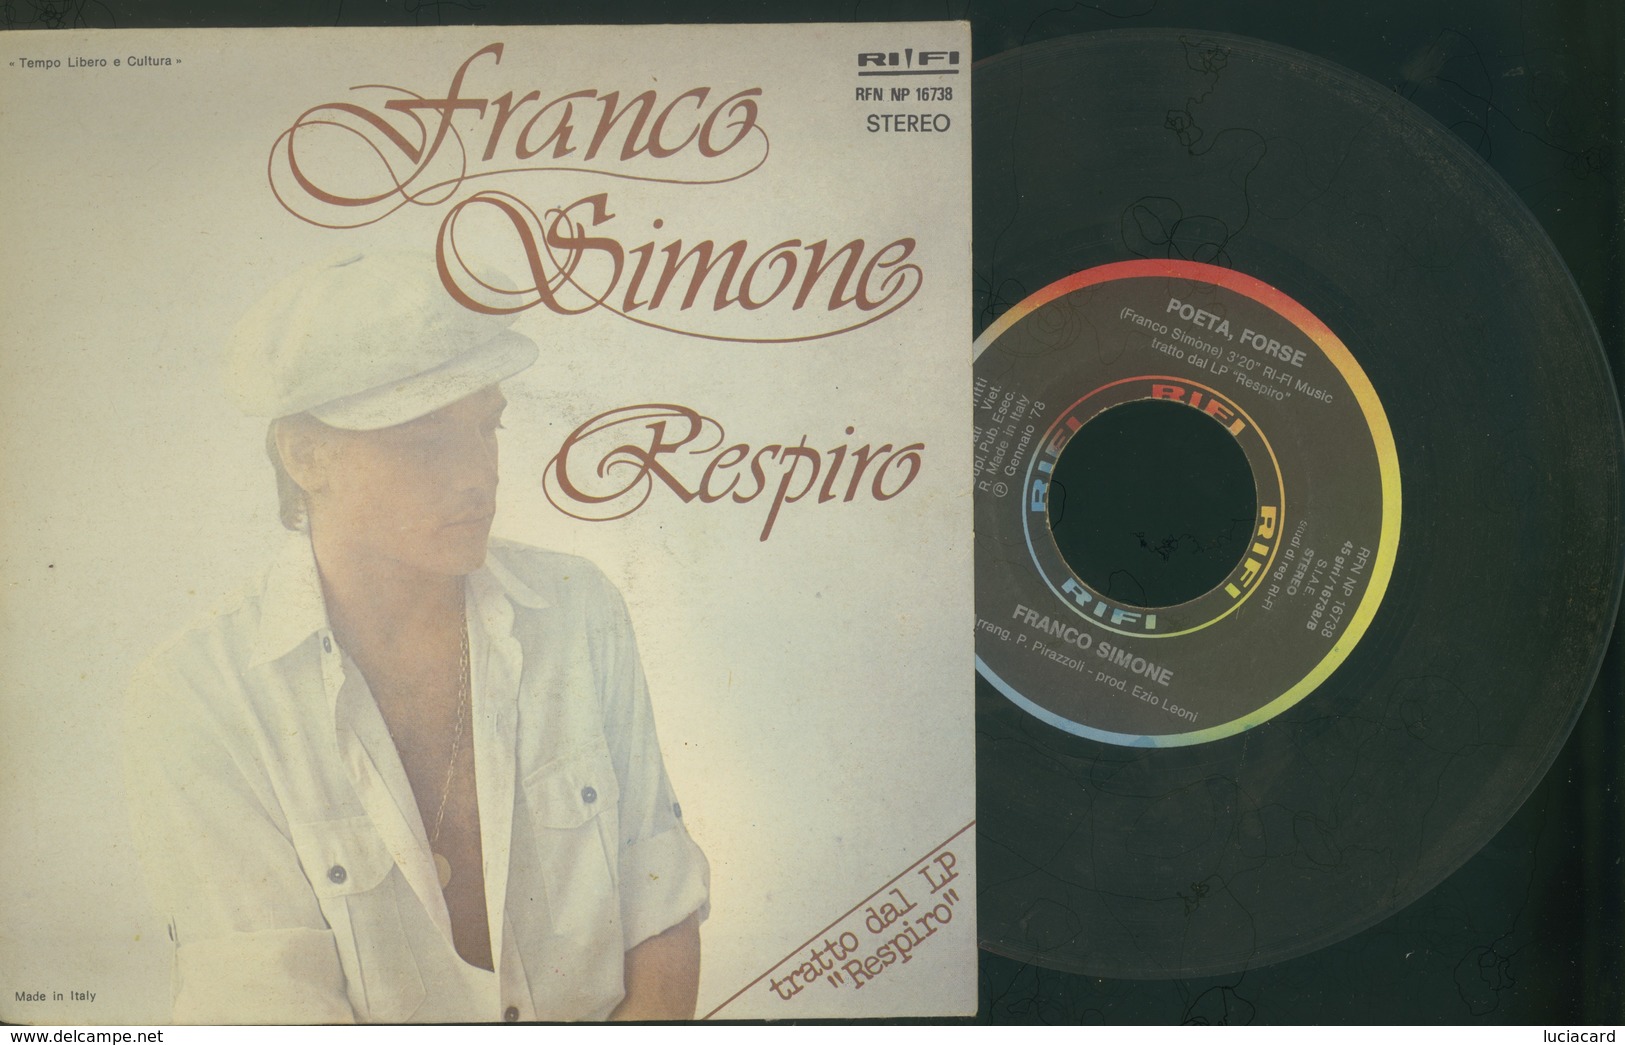 FRANCO SIMONE -RESPIRO -POETA FORSE -DISCO 45 GIRI 1978 - Other - Italian Music